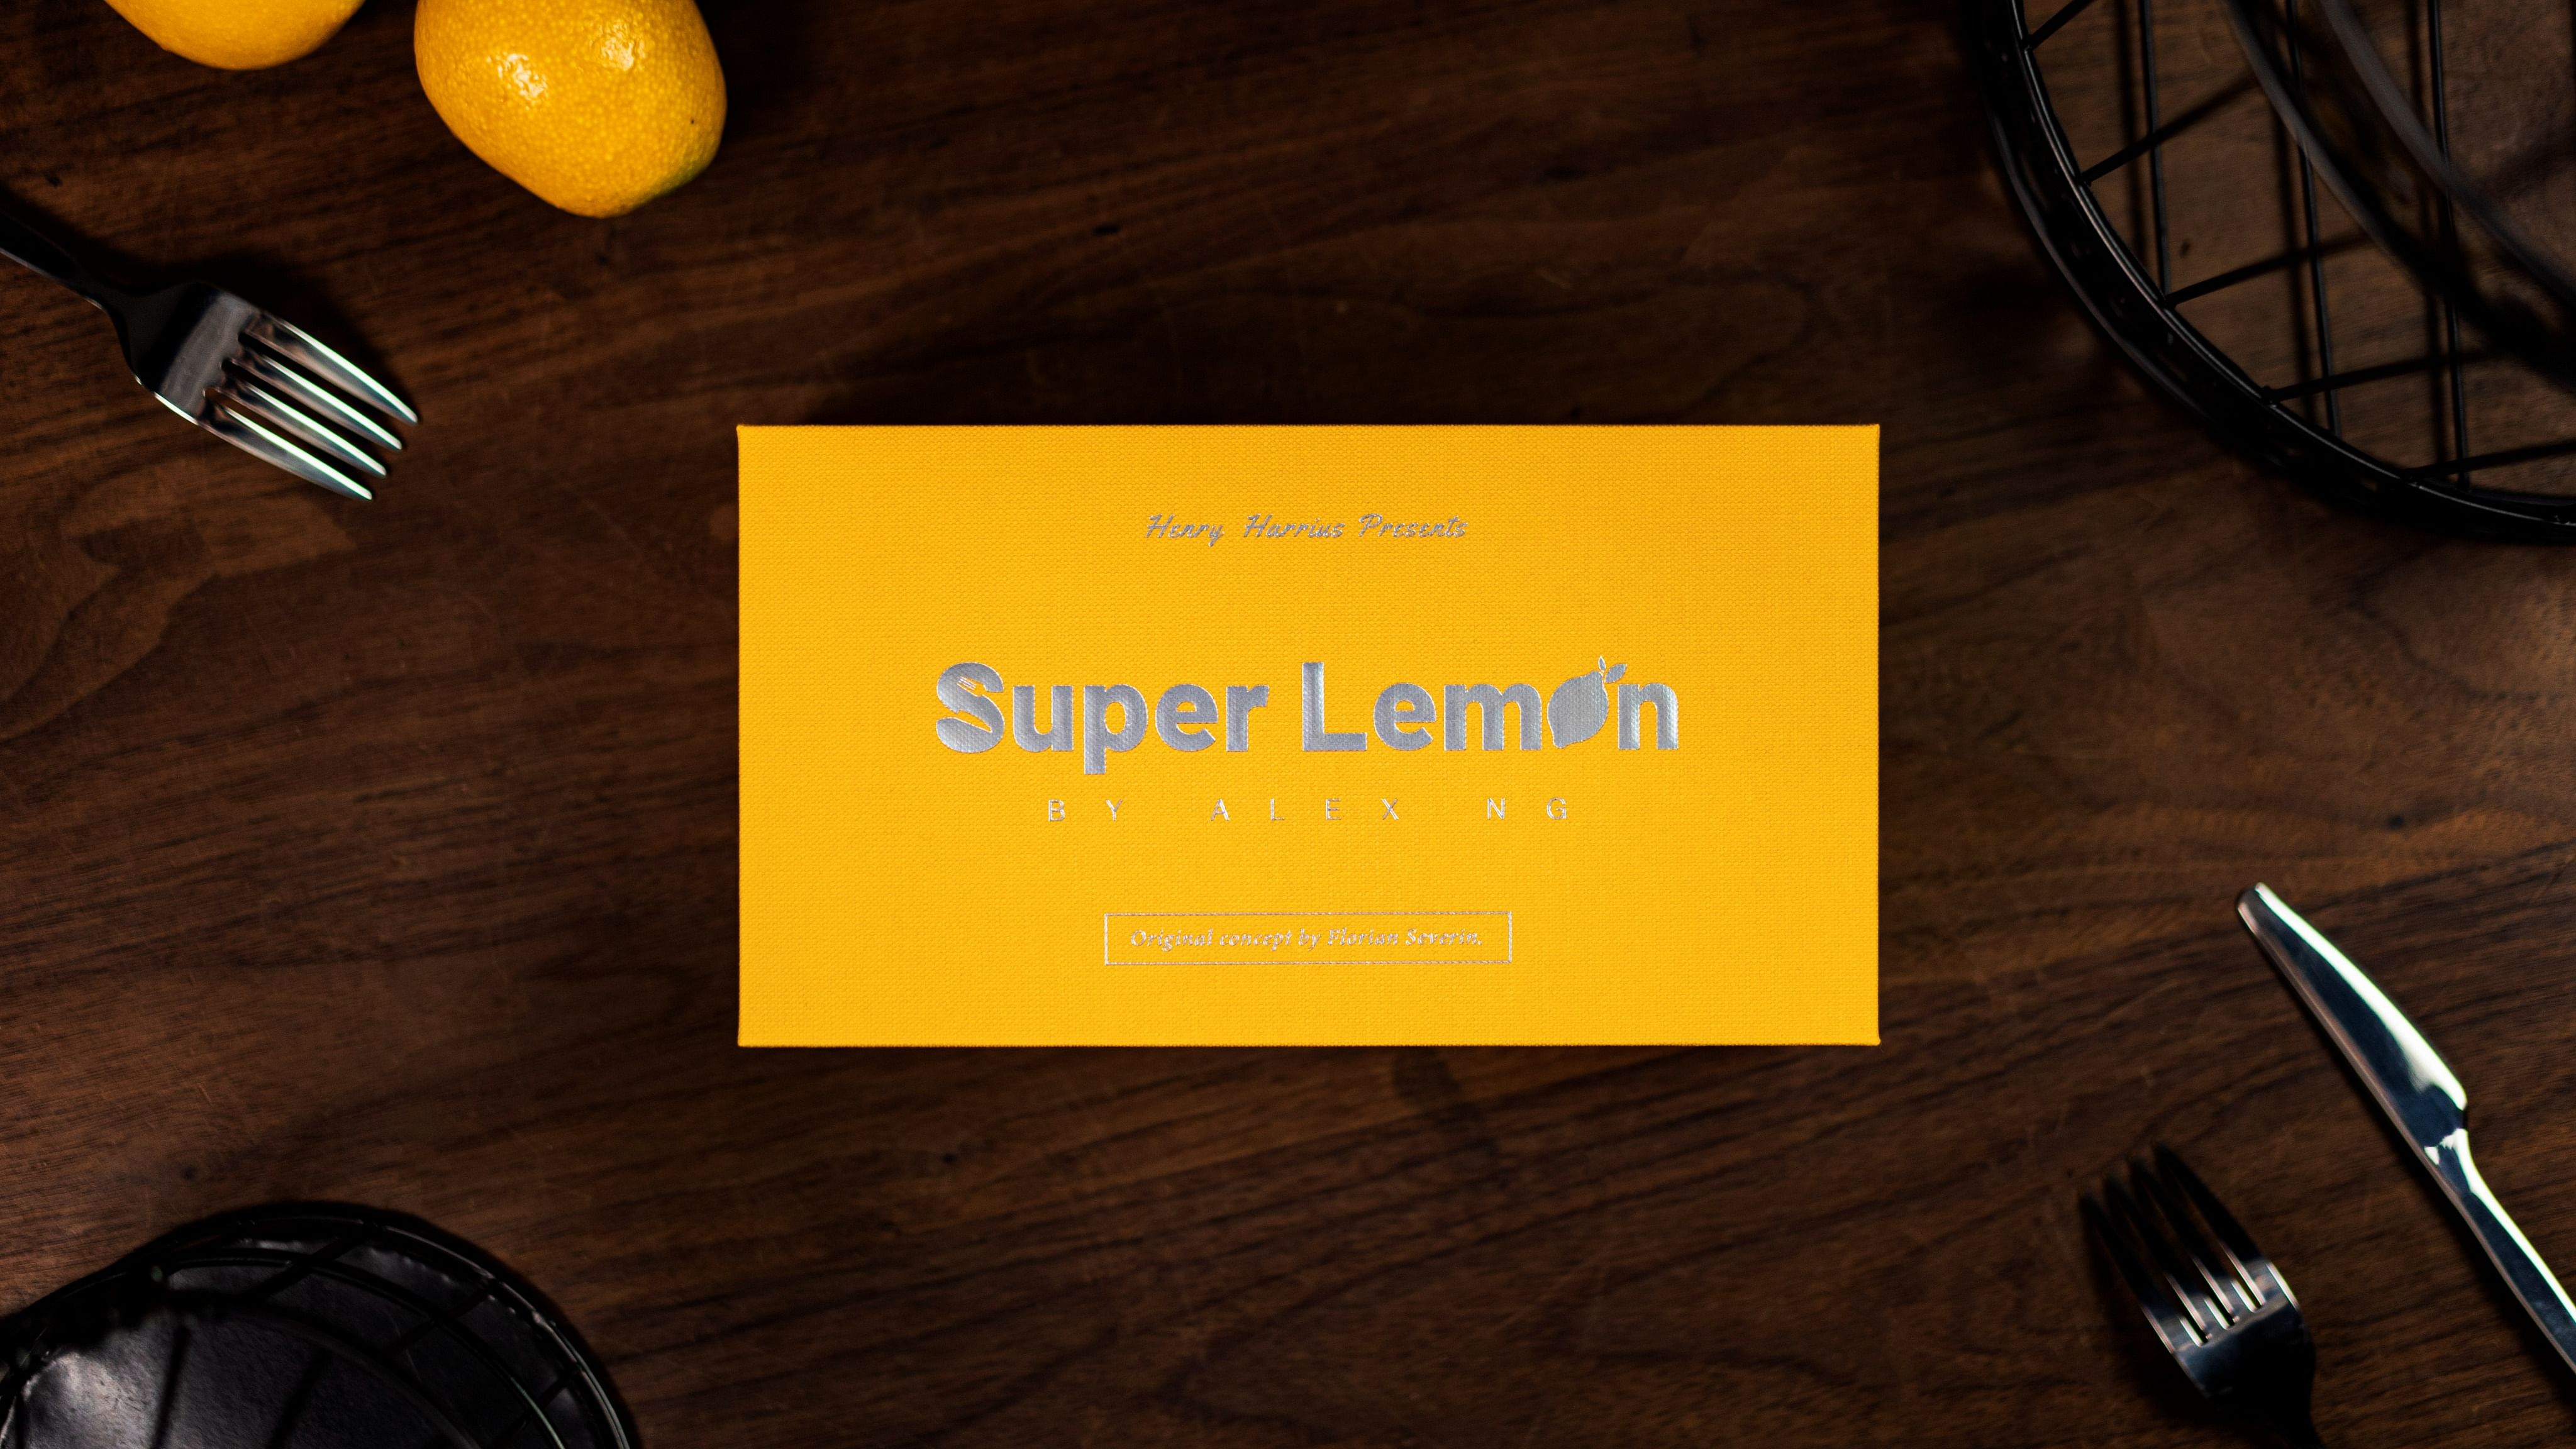 Super Lemon - Henry Harrius and Alex Ng - Vanishing Inc. Magic shop